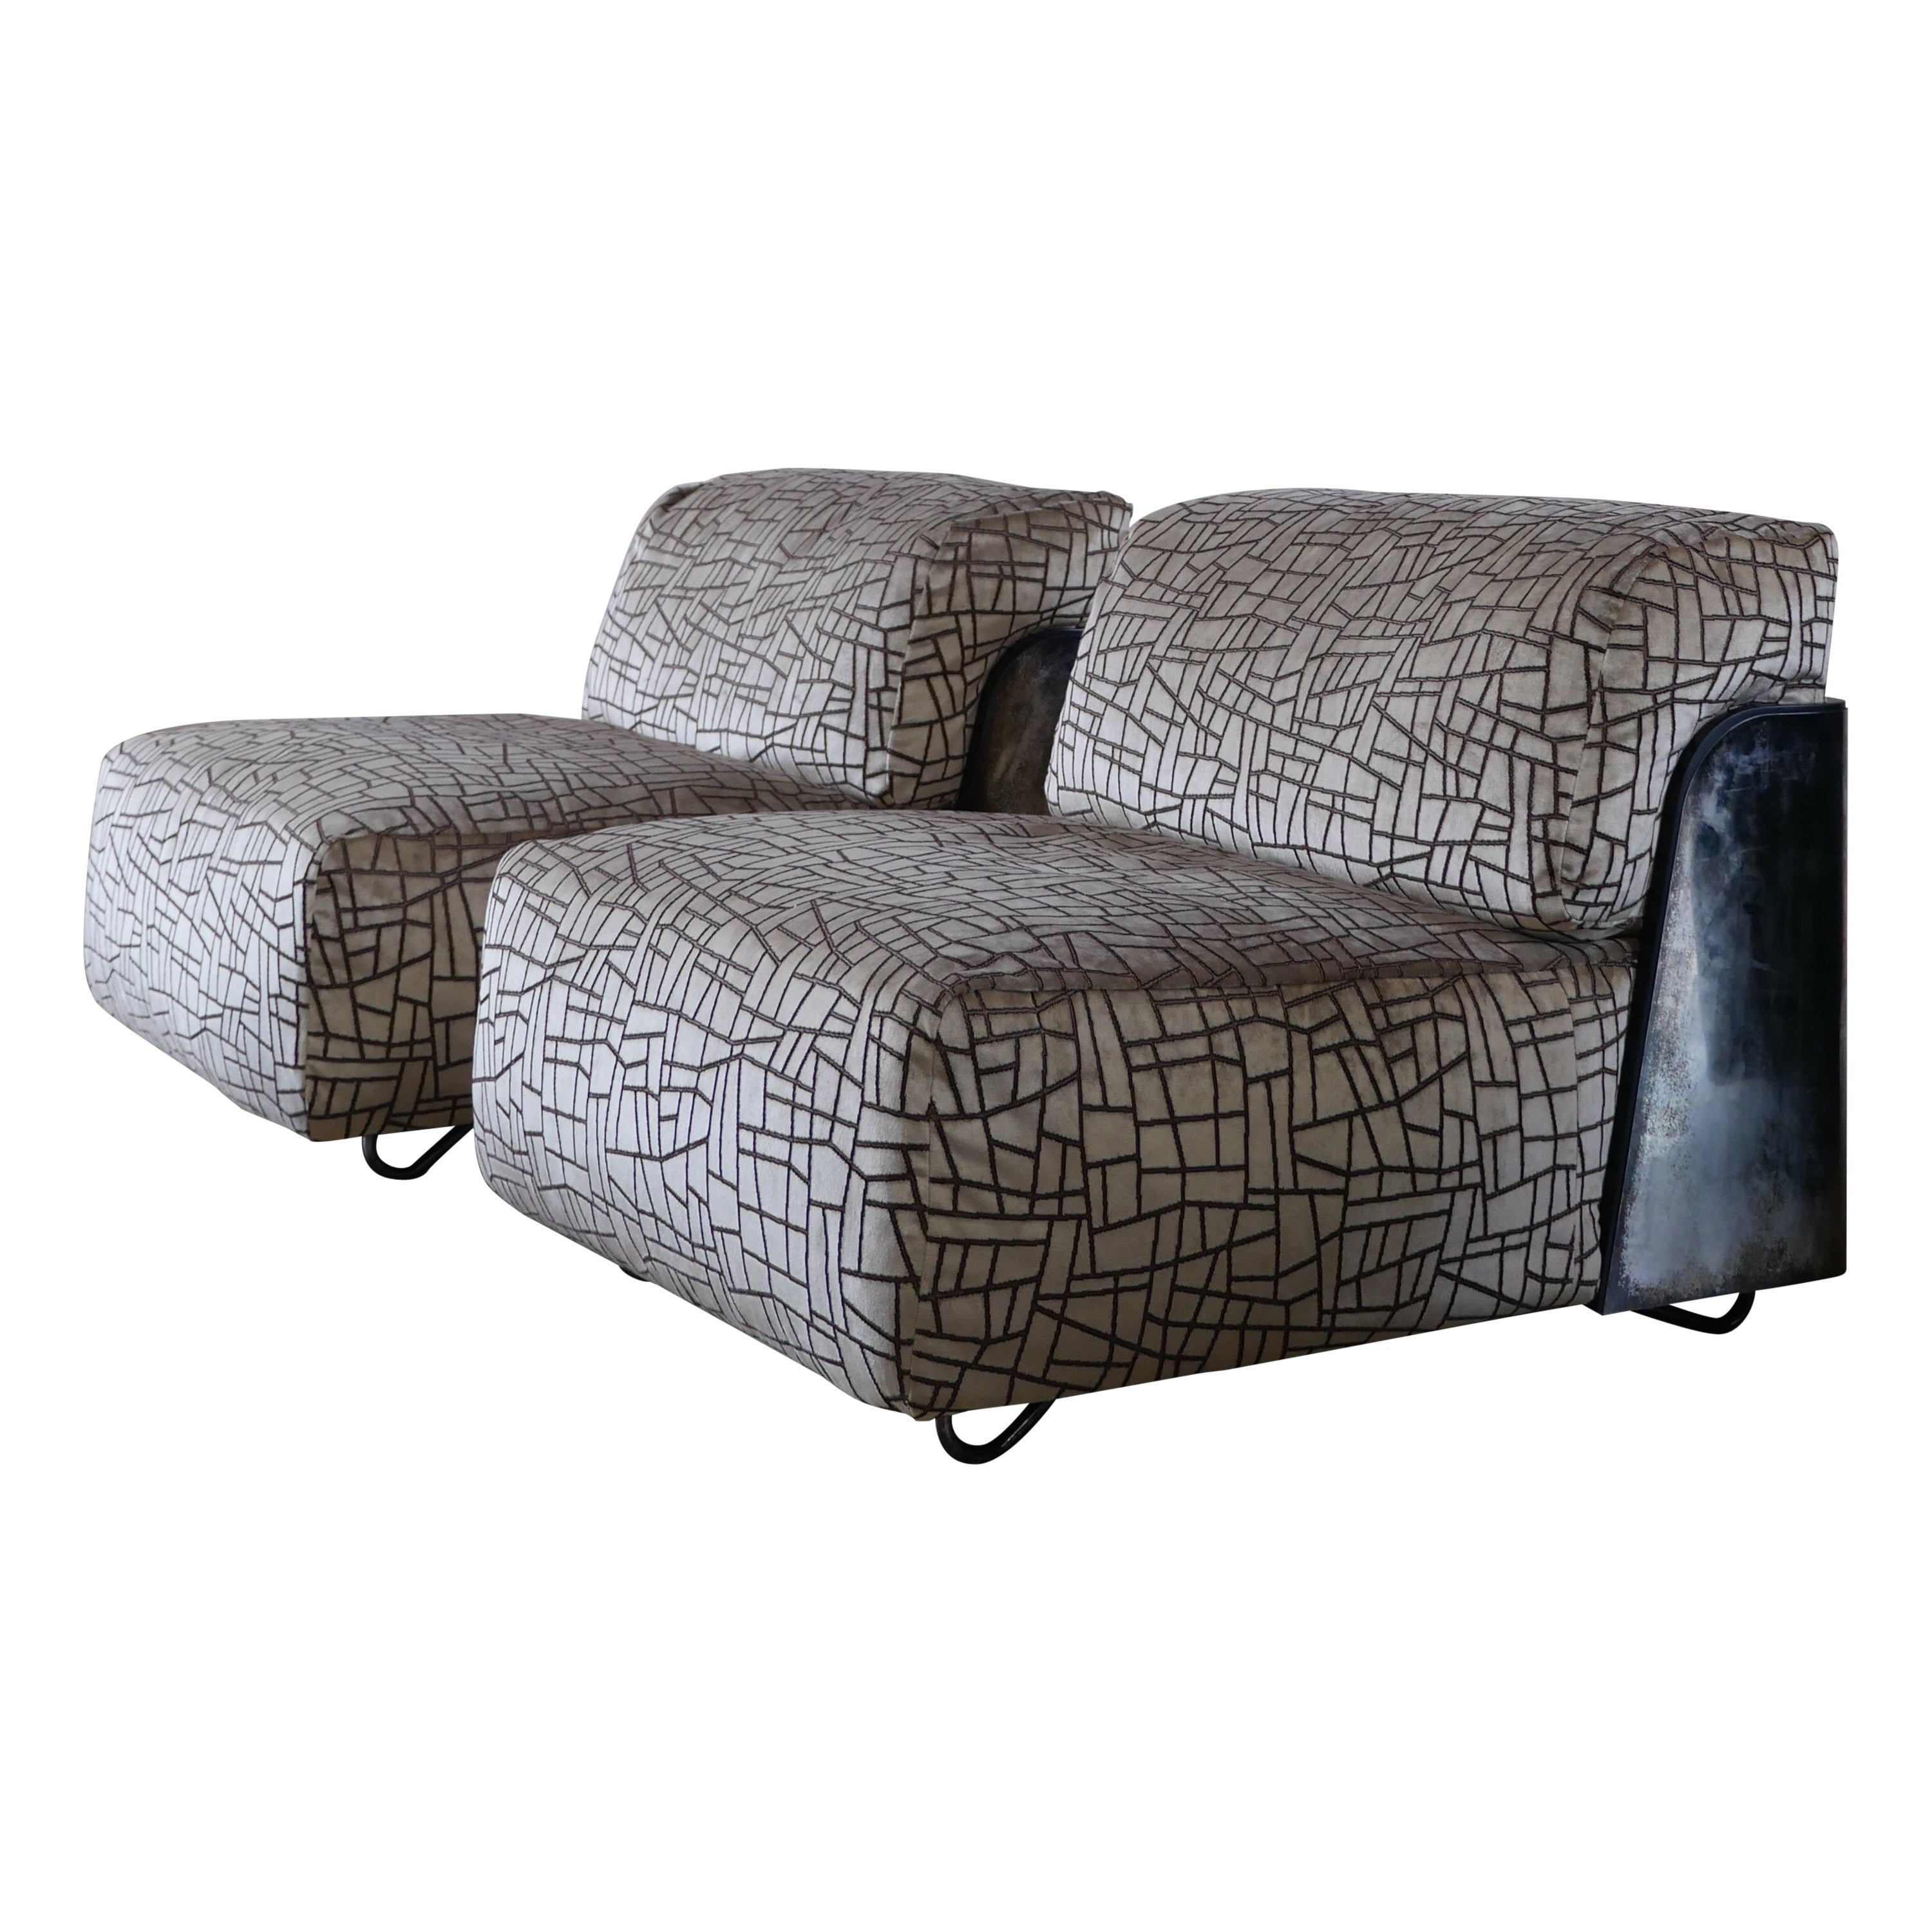 Modern Saint-Germain Lounge Chair by Italian Designer Gio Pagani - Set of 2 For Sale